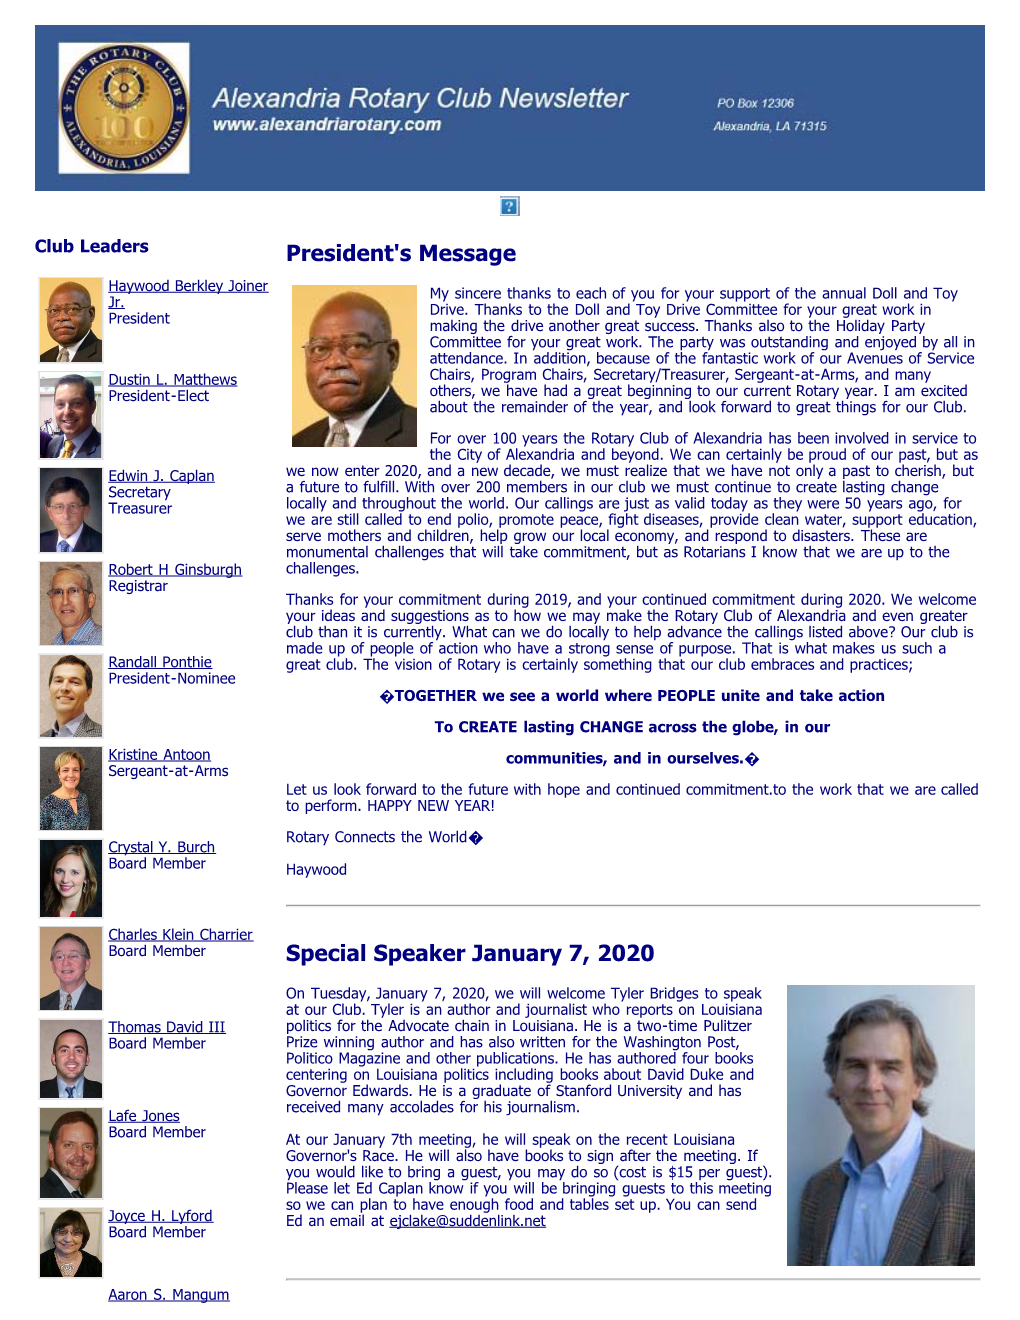 President's Message Special Speaker January 7, 2020